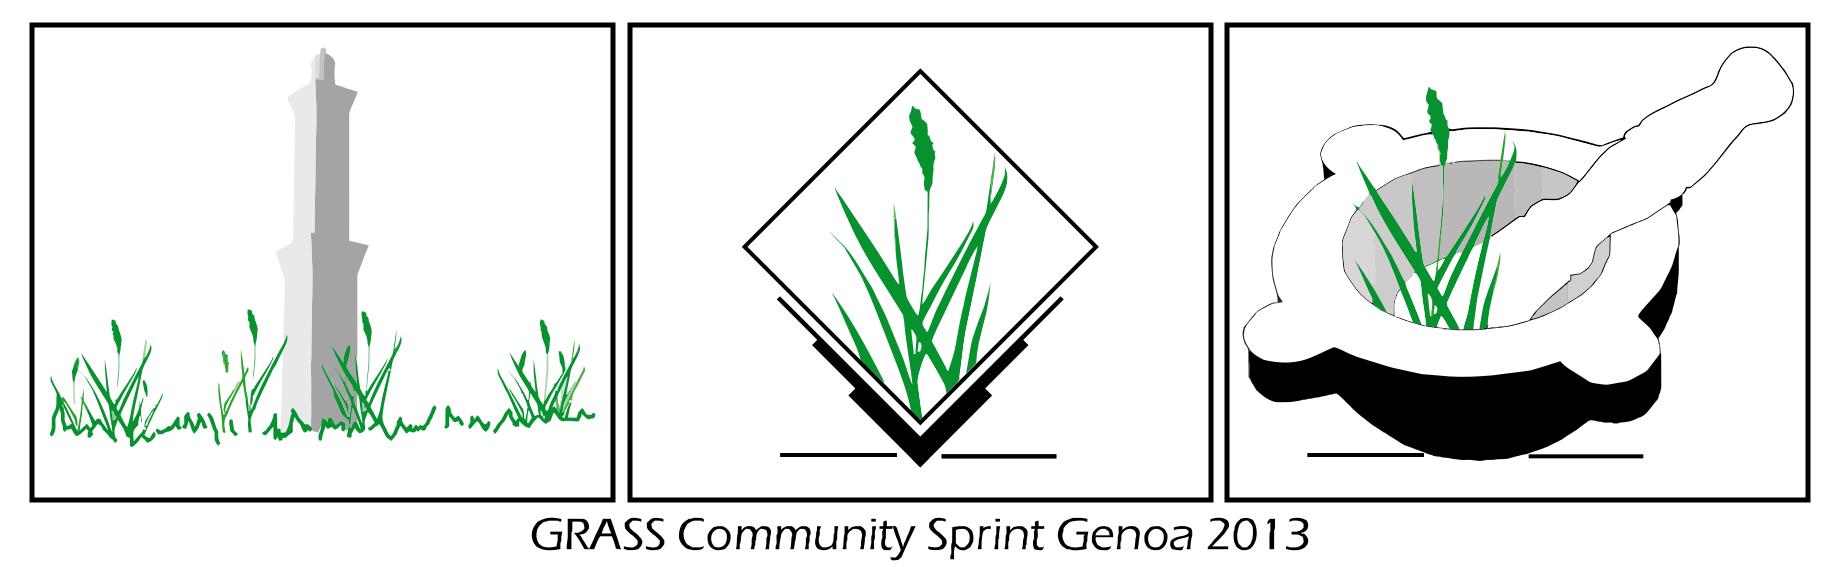 Community sprint genova2013.png